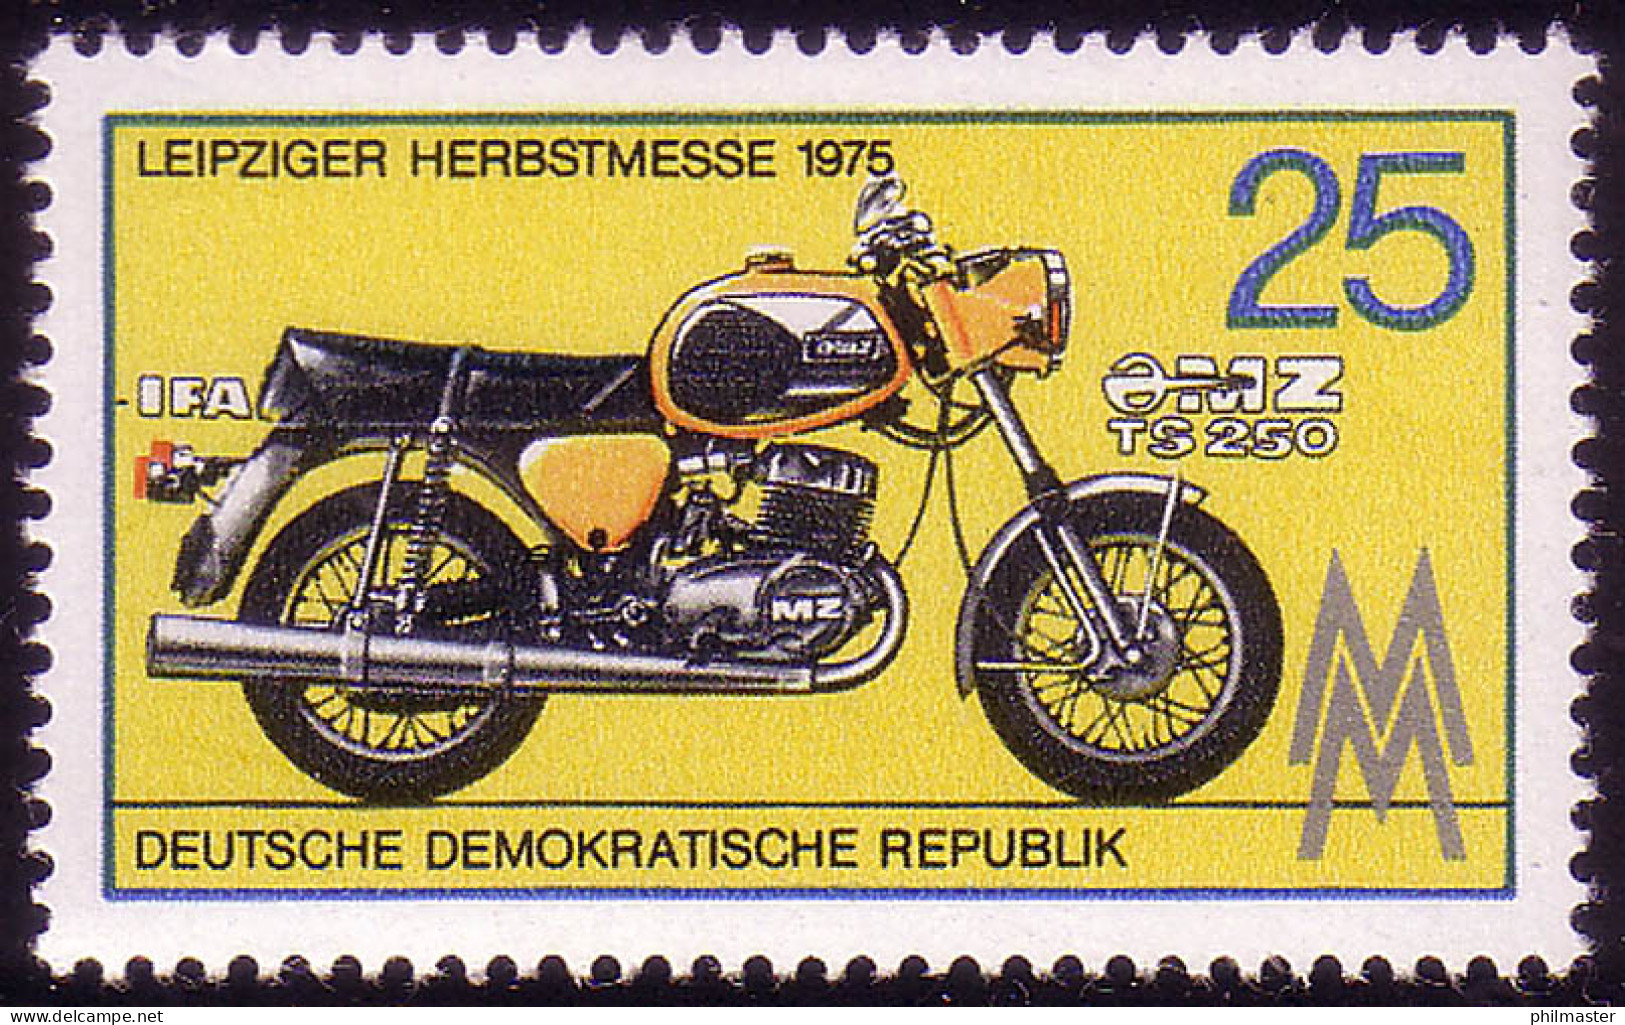 2077 Leipziger Herbstmesse 1975 25 Pf Motorrad IFA MZ TS 250, ** - Ongebruikt